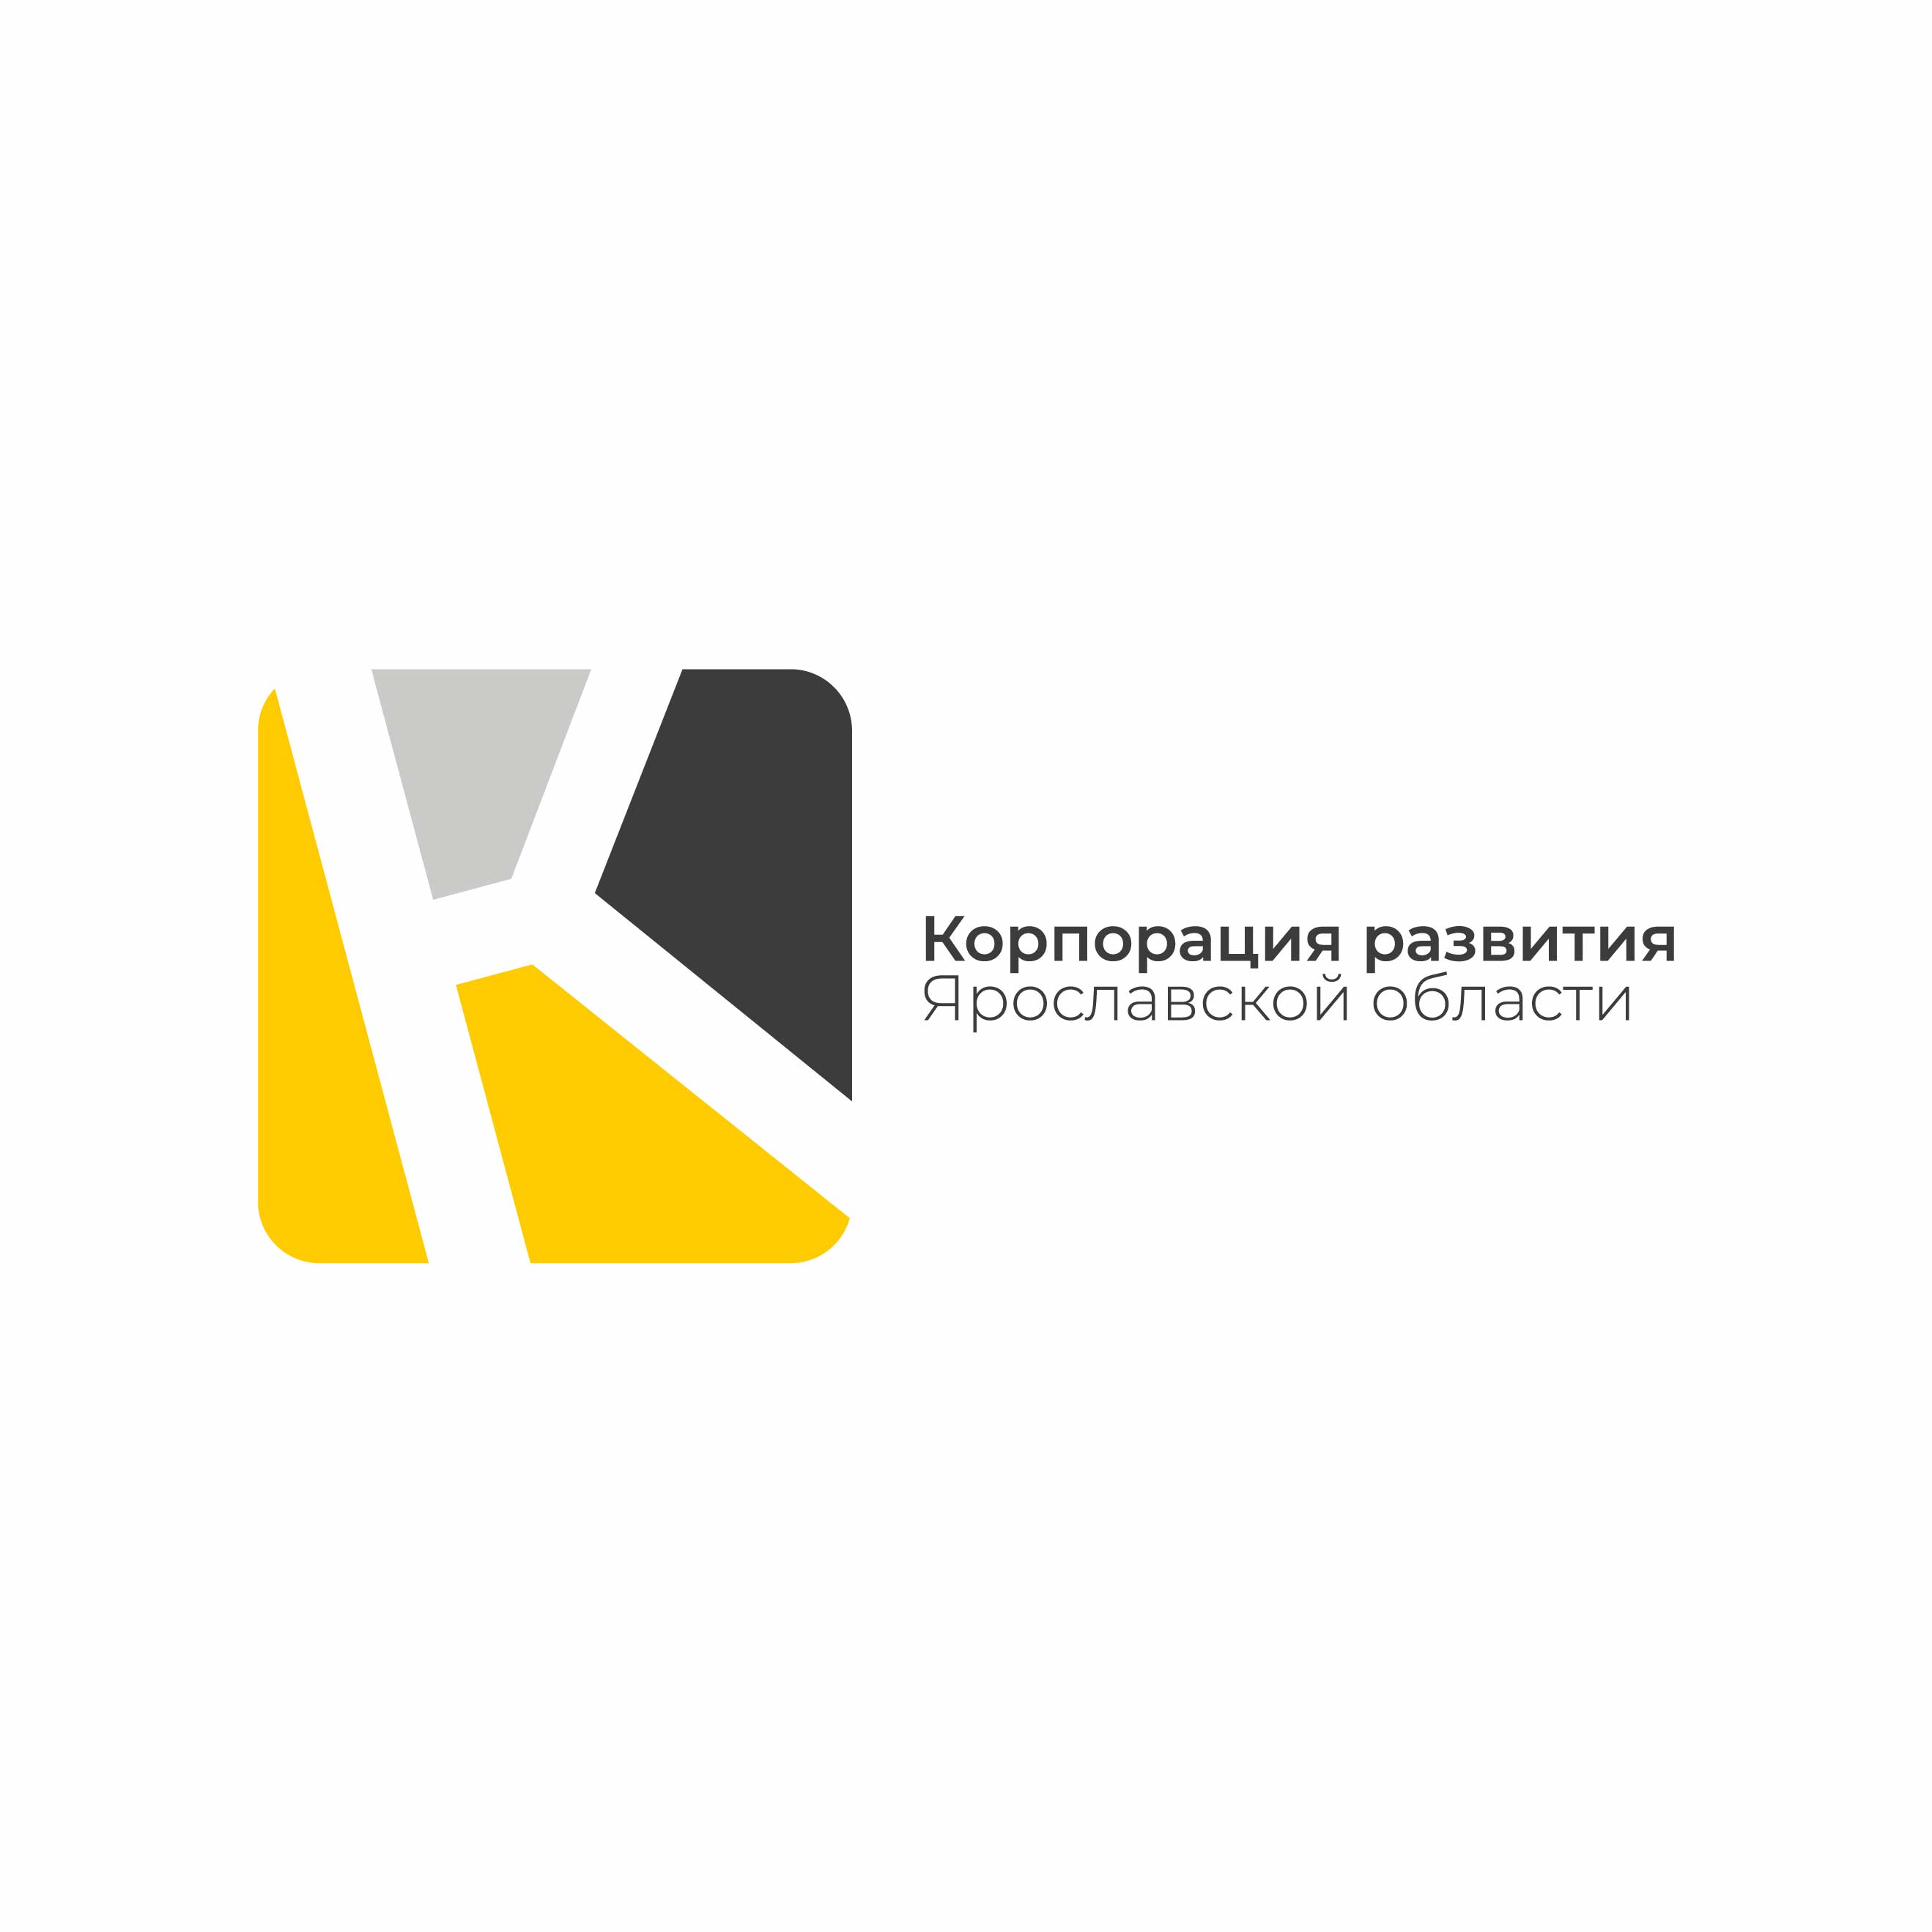 Yaroslavl Region Development Corporation